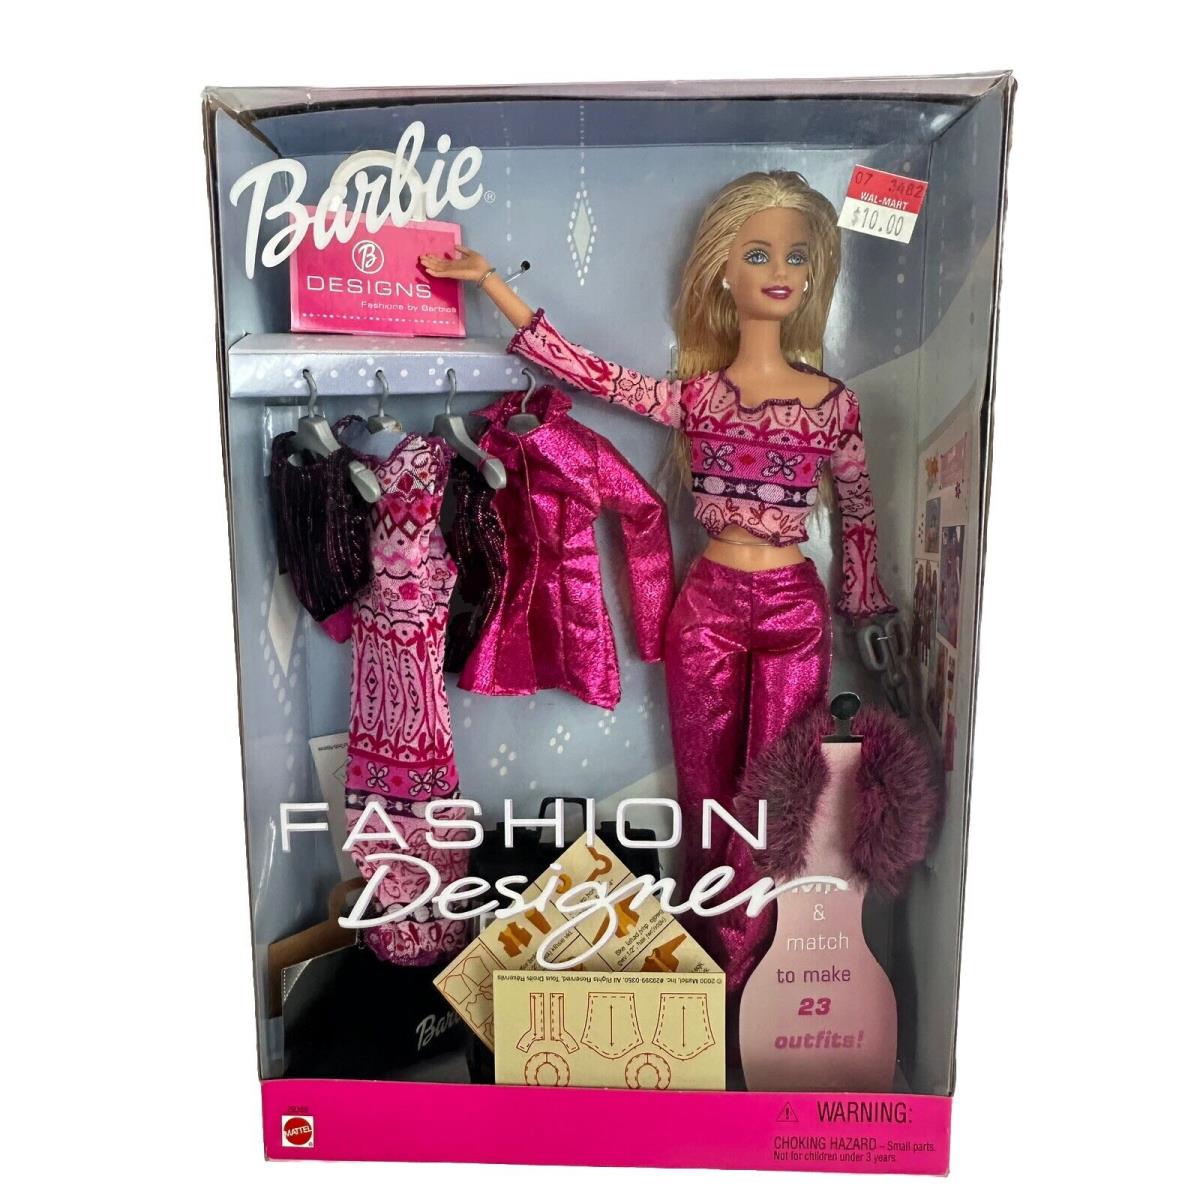 Barbie Fashion Designer Barbie Doll Mix Match 29399 Mattel 2000 Nrfb